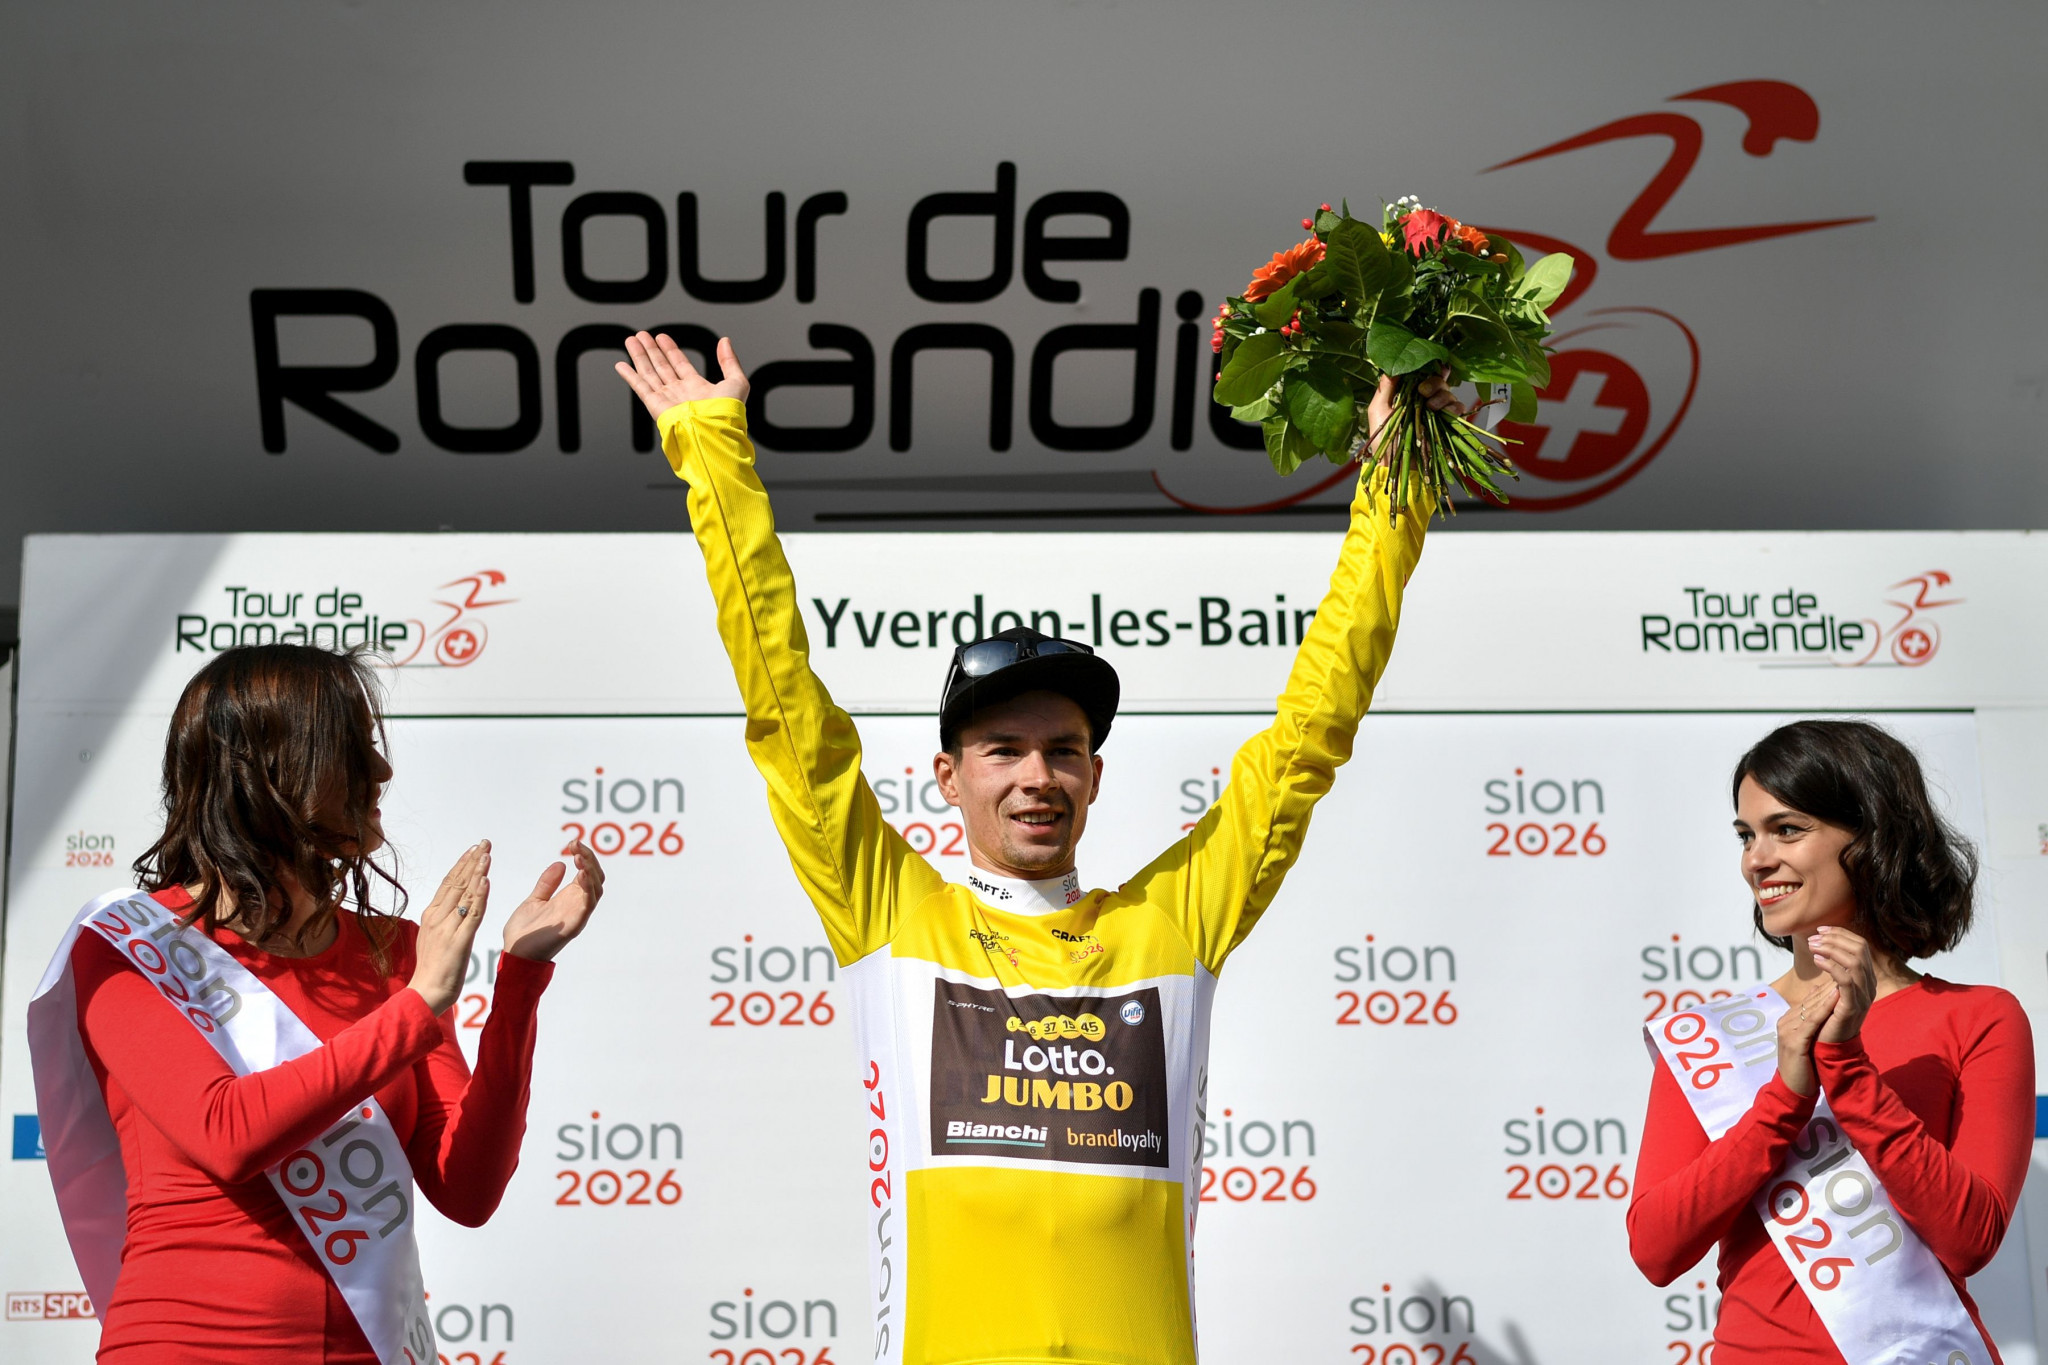 Primož Roglič is now the overall Tour de Romandie leader ©Getty Images